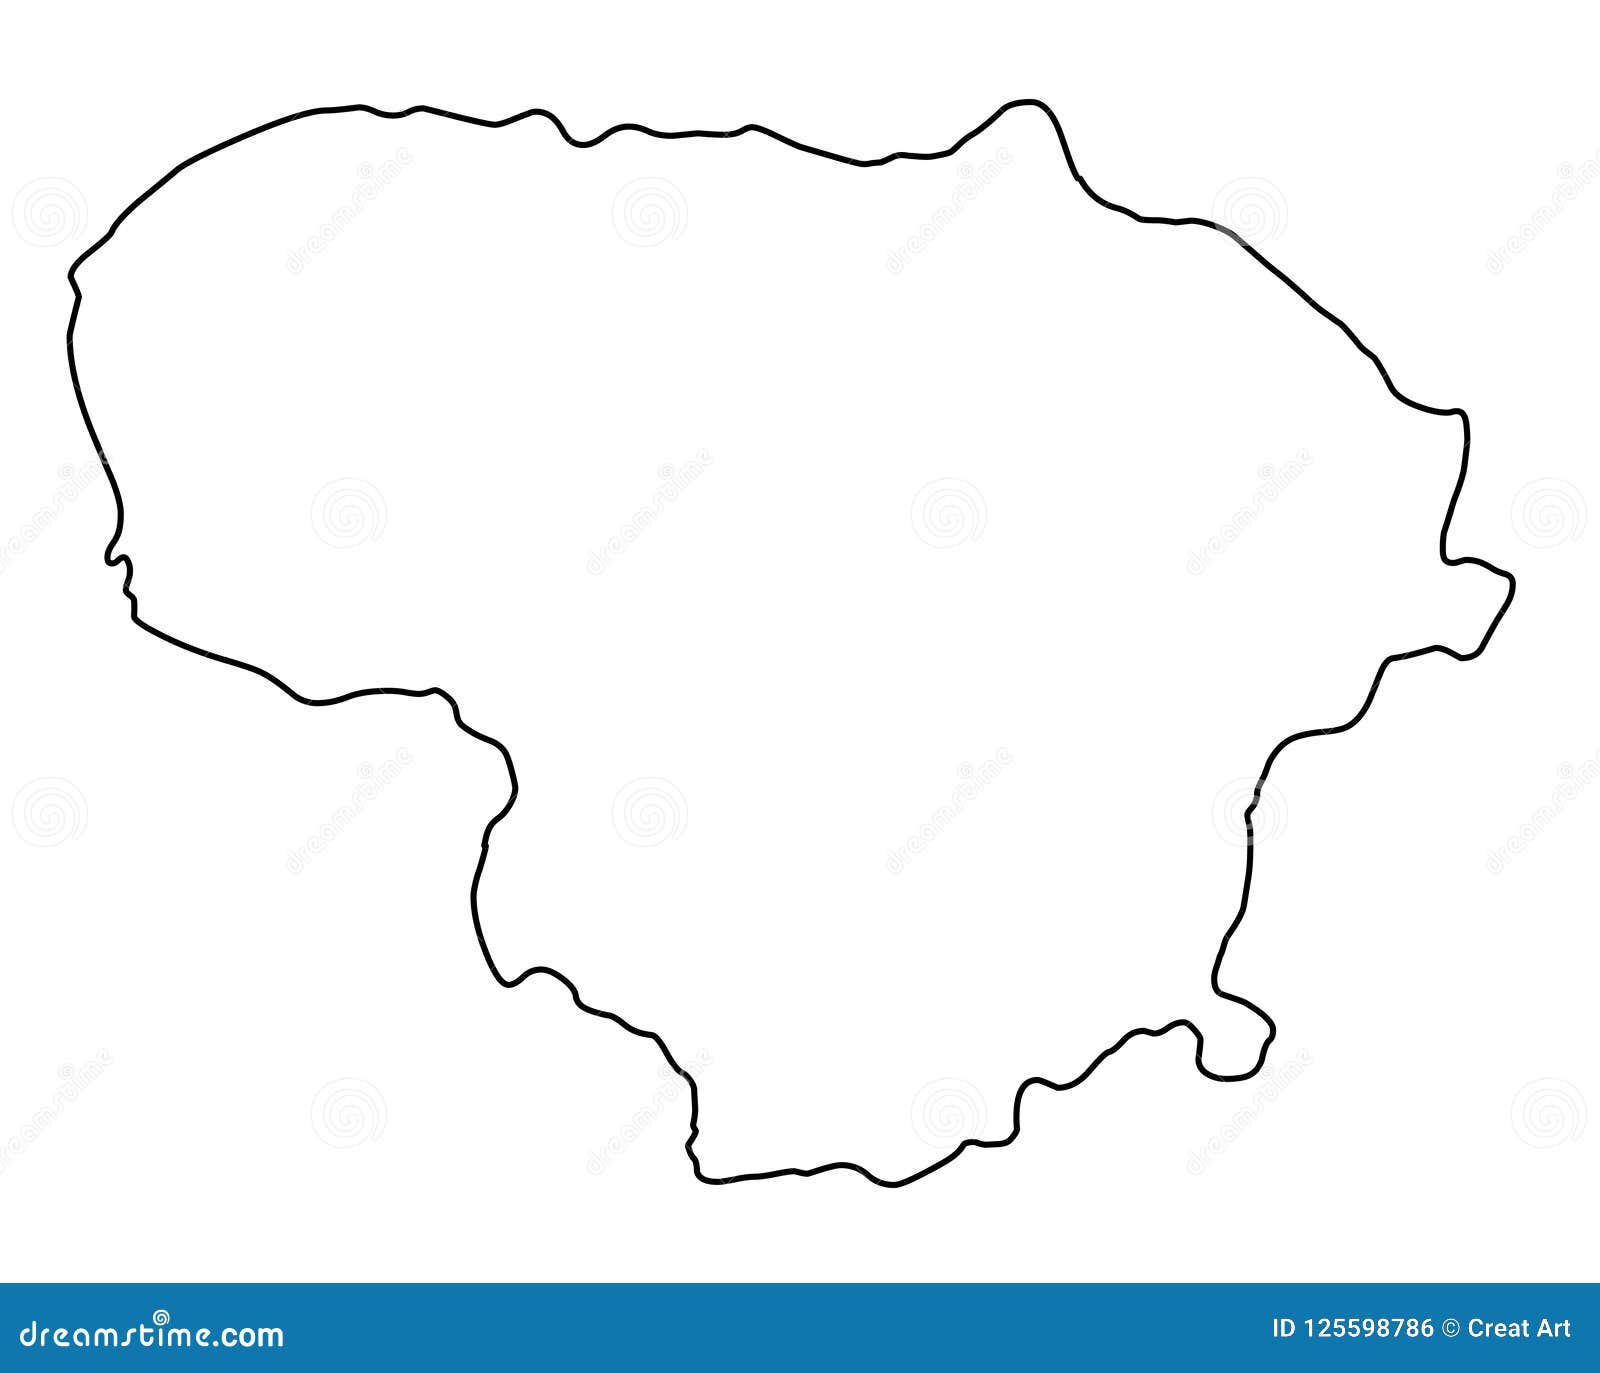 lithuania-map-outline-vector-illustration-lithuania-map-outline-vector-illustration-isolated-white-background-125598786.jpg